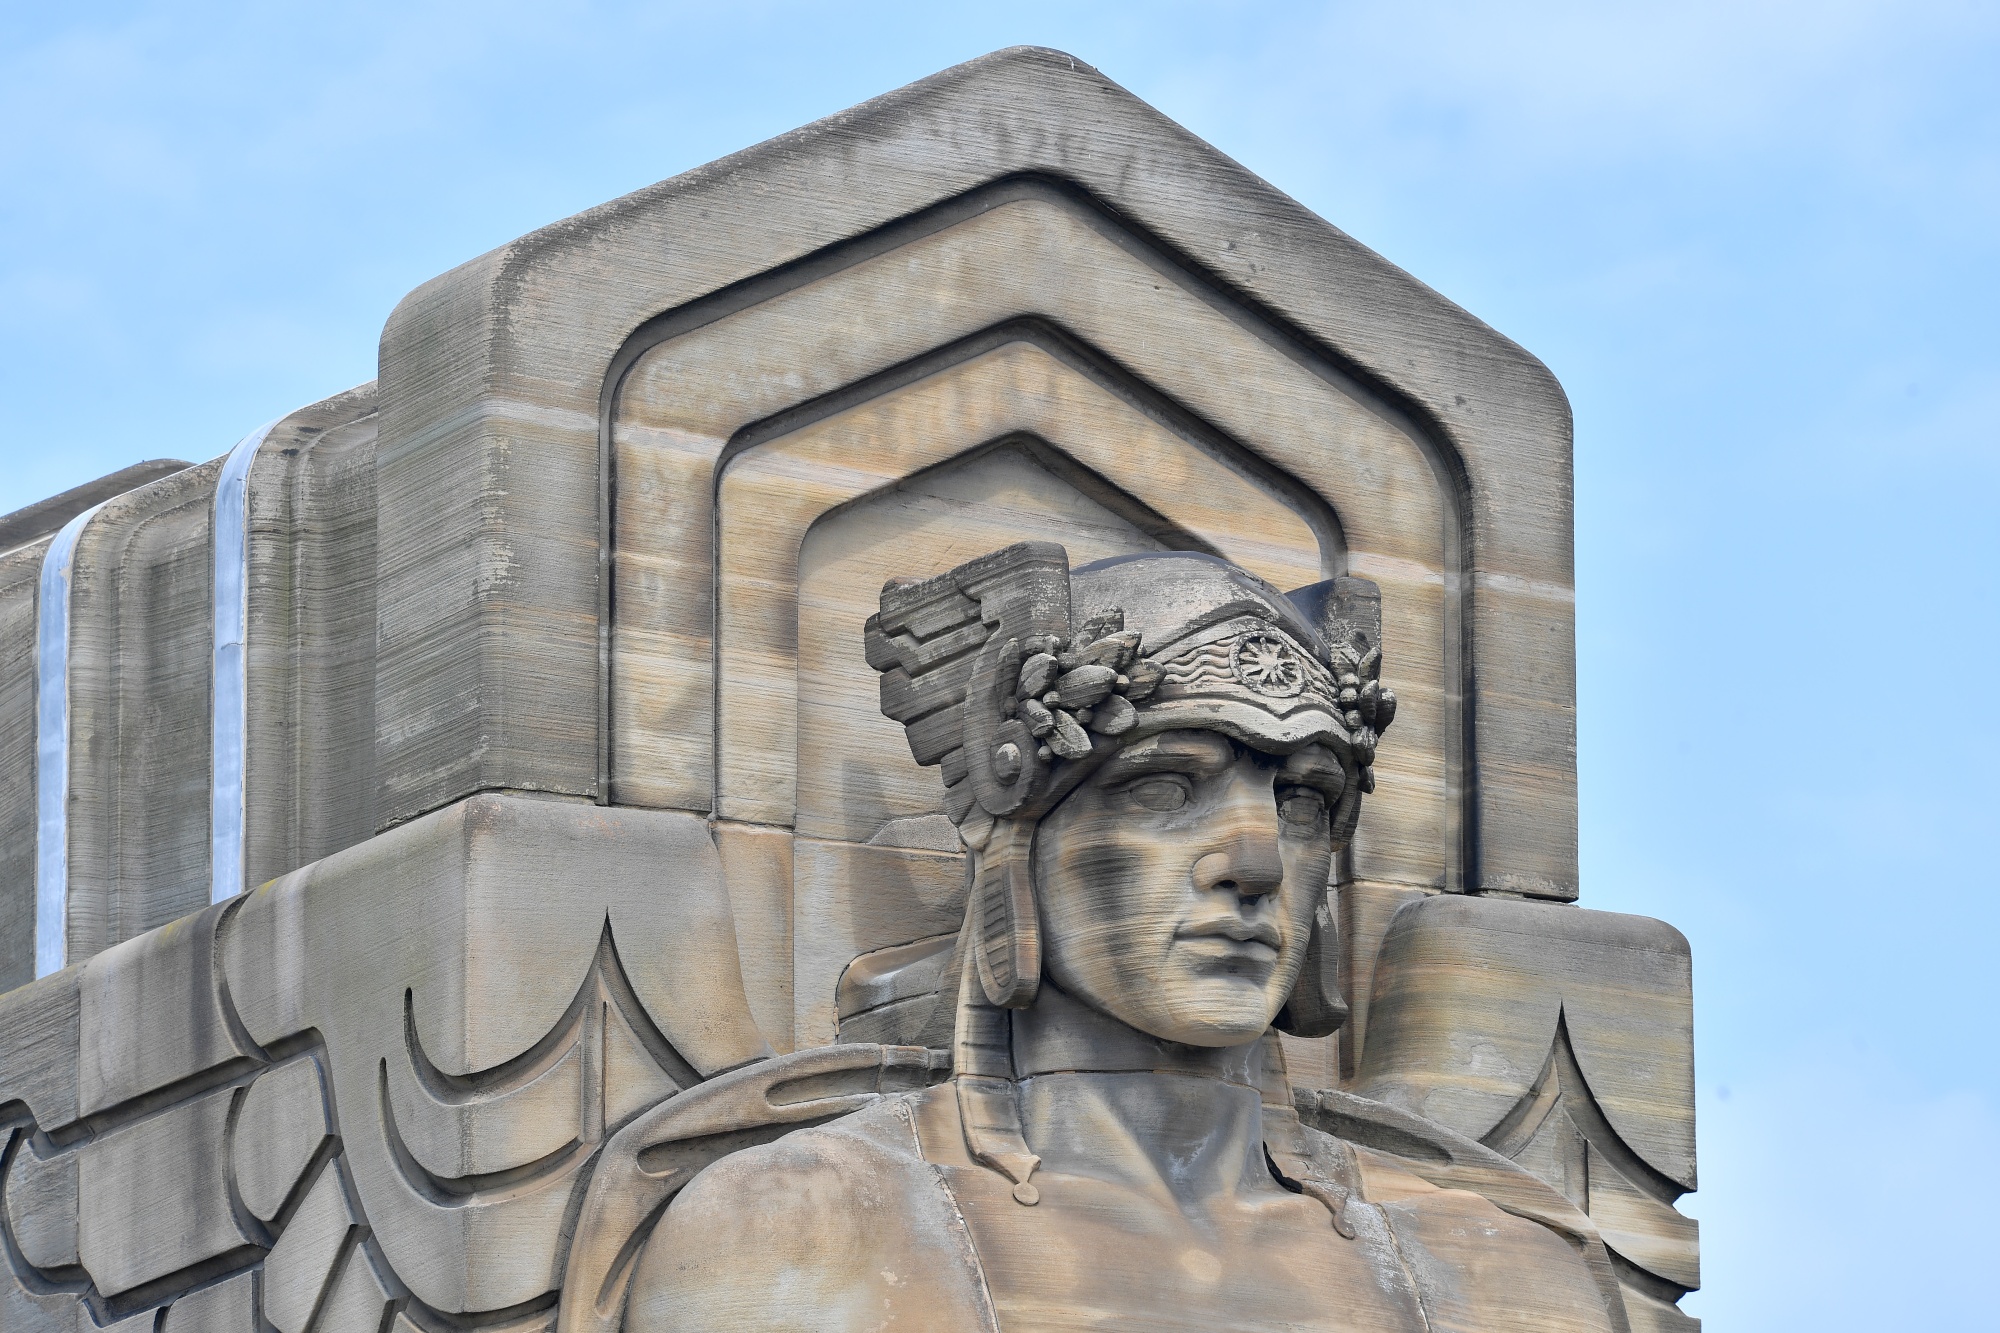 Behind the Cleveland Guardians: An Art-Deco Bridge - Bloomberg